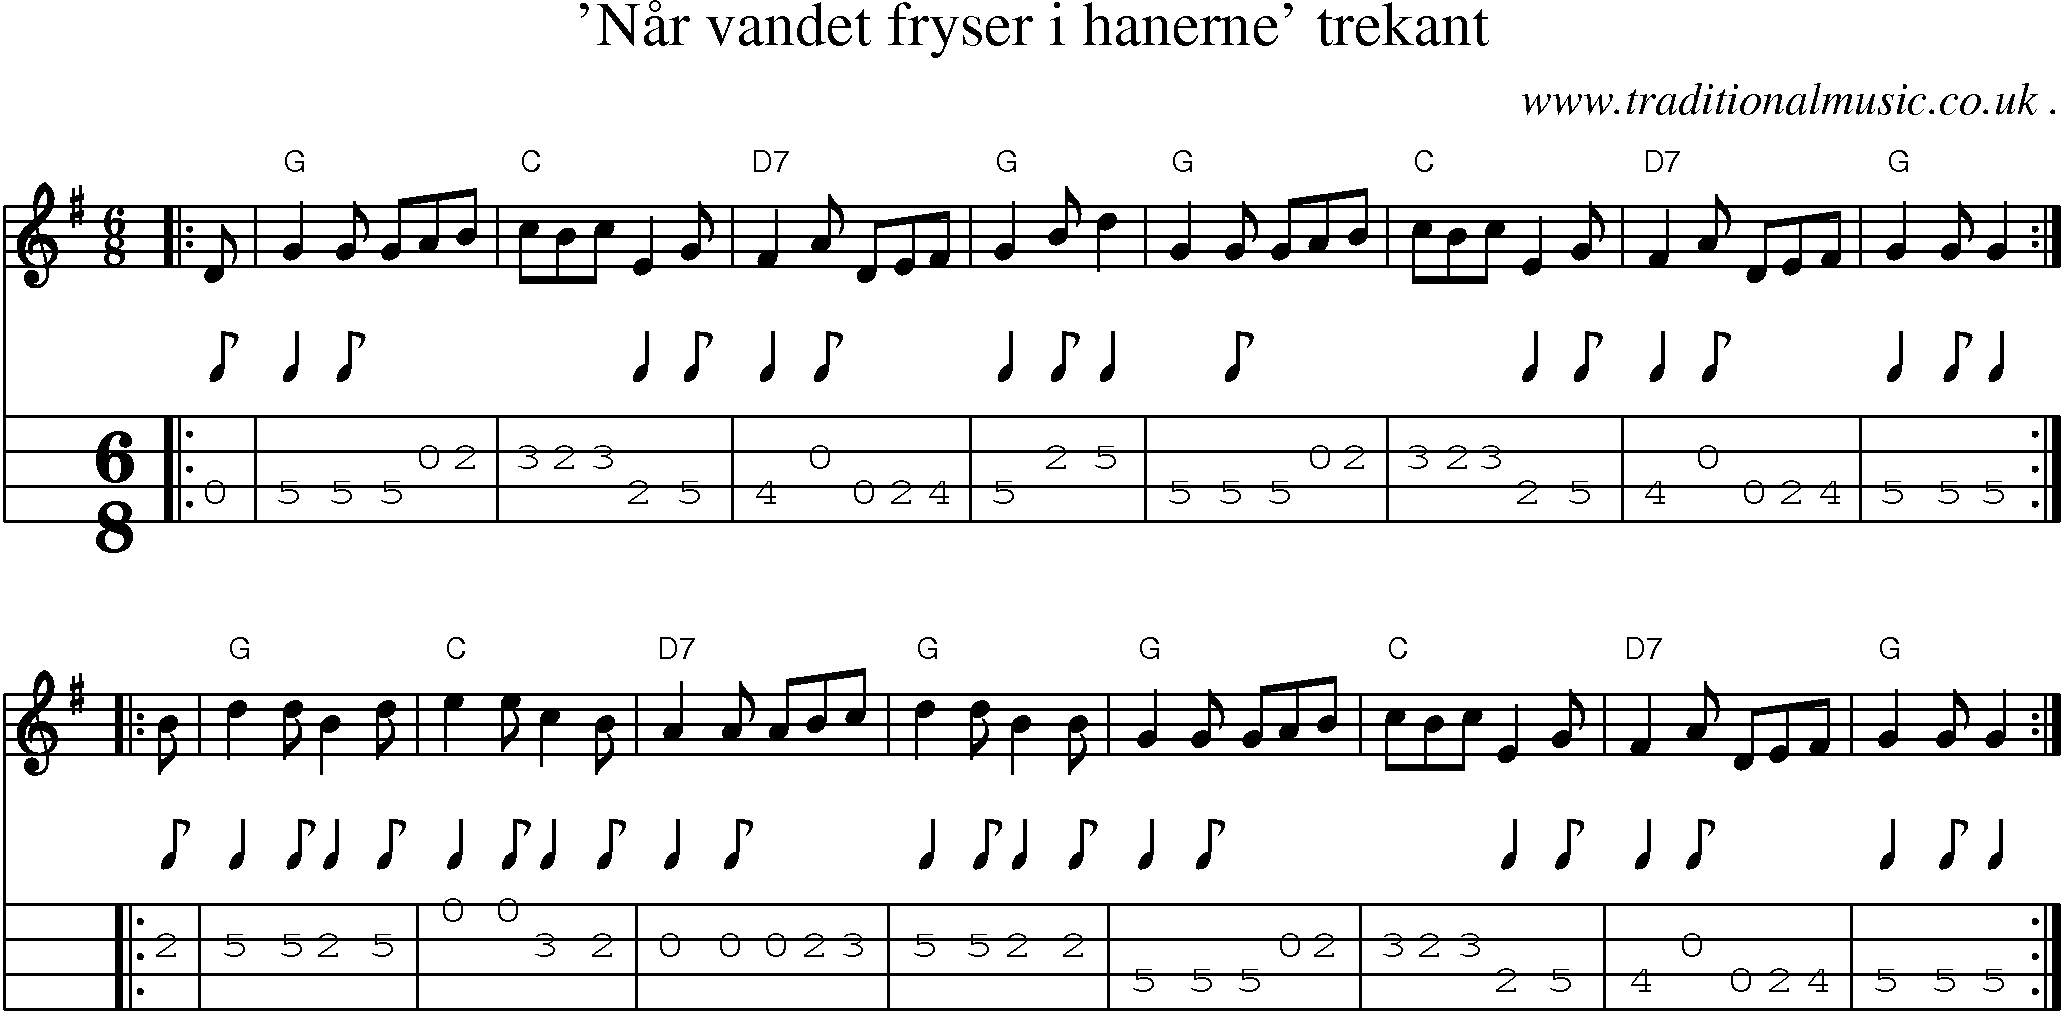 Sheet-music  score, Chords and Mandolin Tabs for Naar Vandet Fryser I Hanerne Trekant